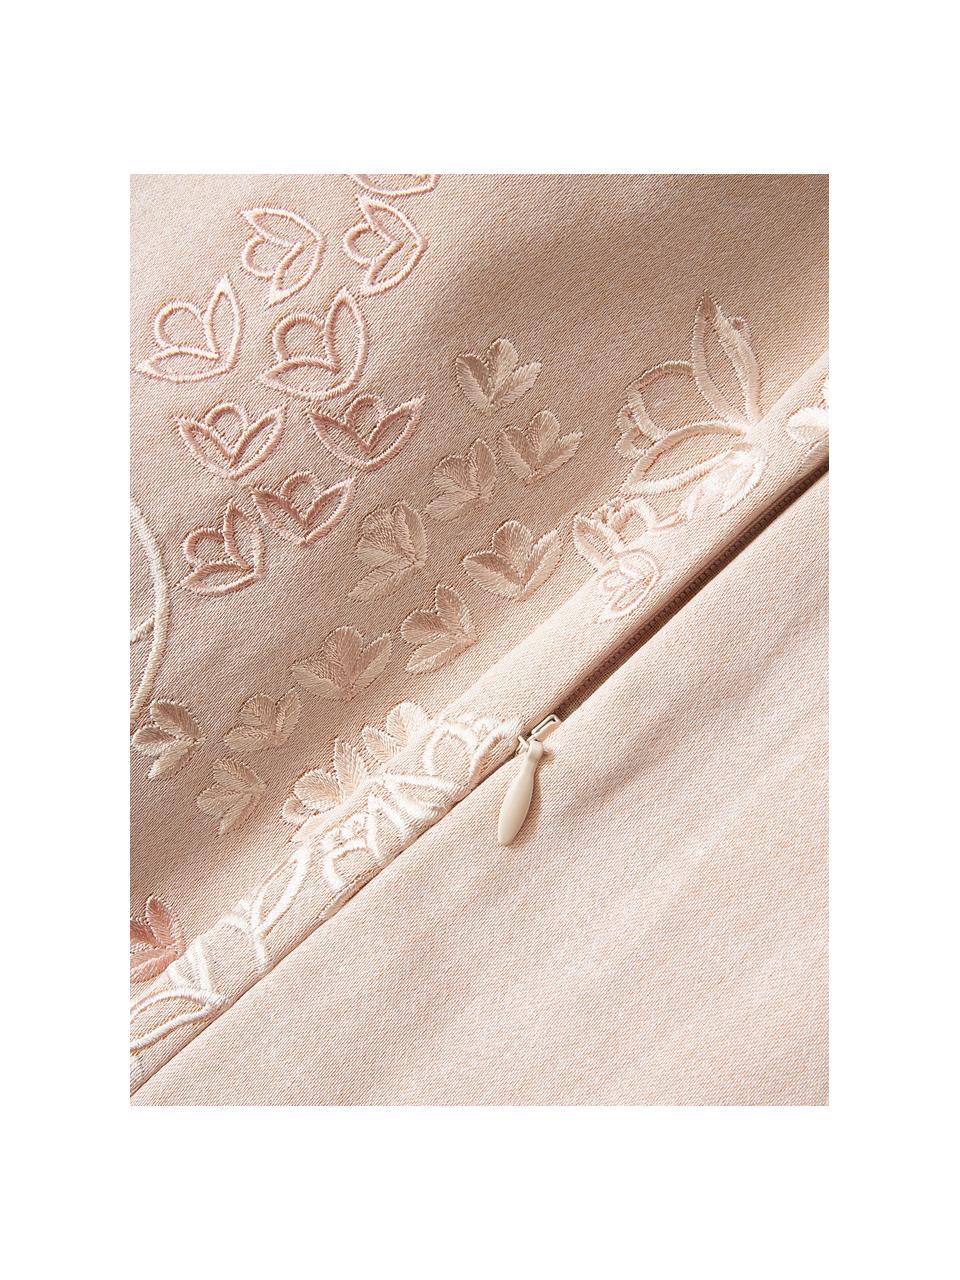 Baumwollsatin-Kissenhülle Cynthia mit Blumen-Muster, 100% Baumwollsatin, Rosa, B 40 x L 40 cm